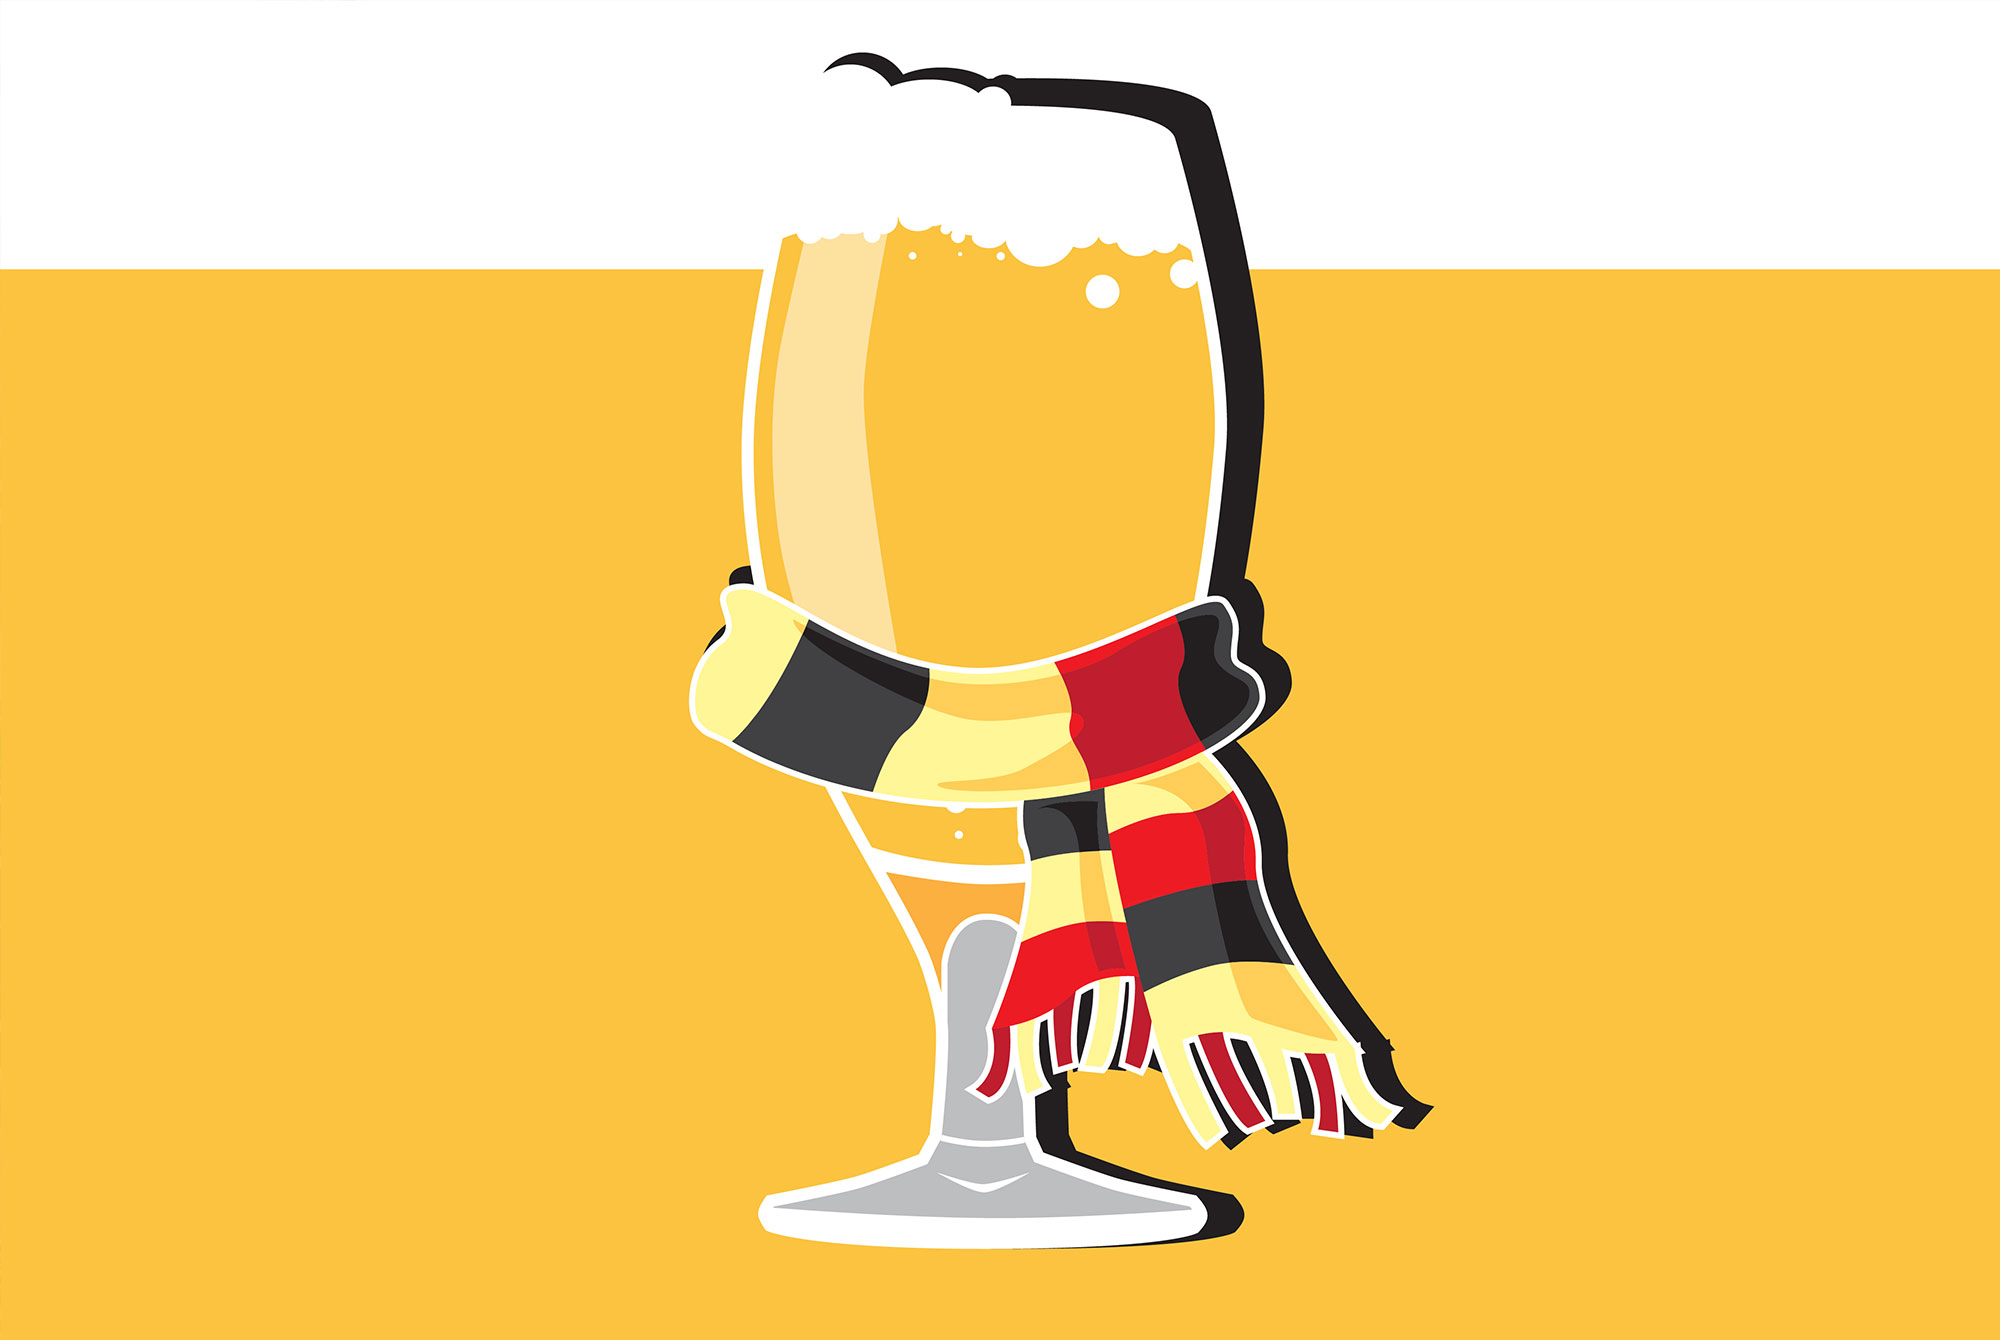 What’s a Belgian Pale Ale?